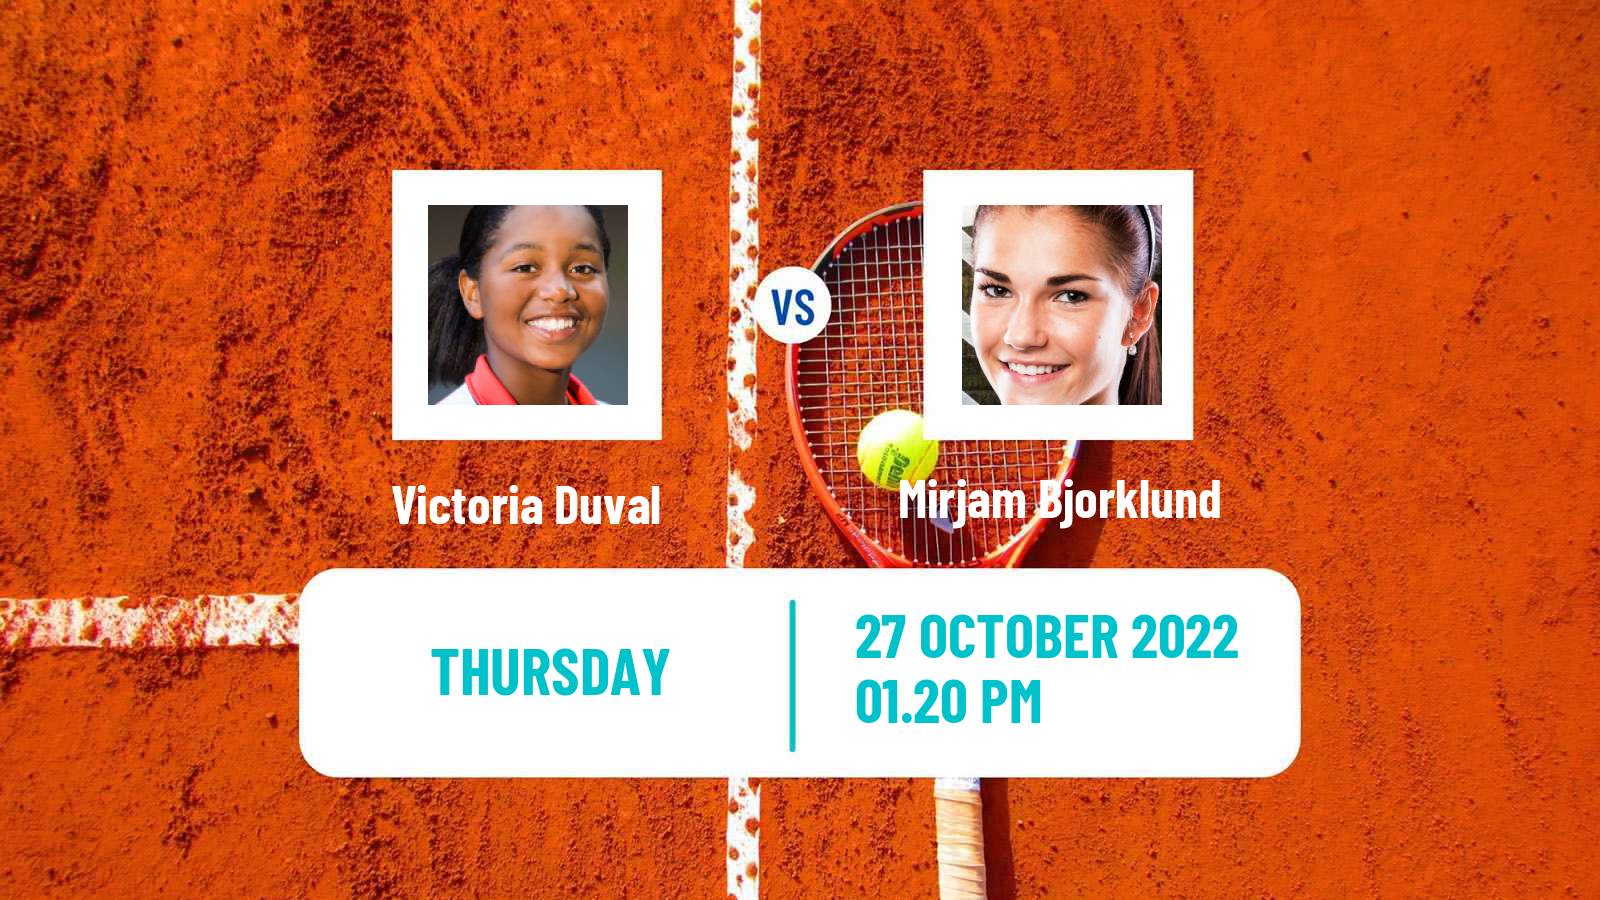 Tennis ITF Tournaments Victoria Duval - Mirjam Bjorklund